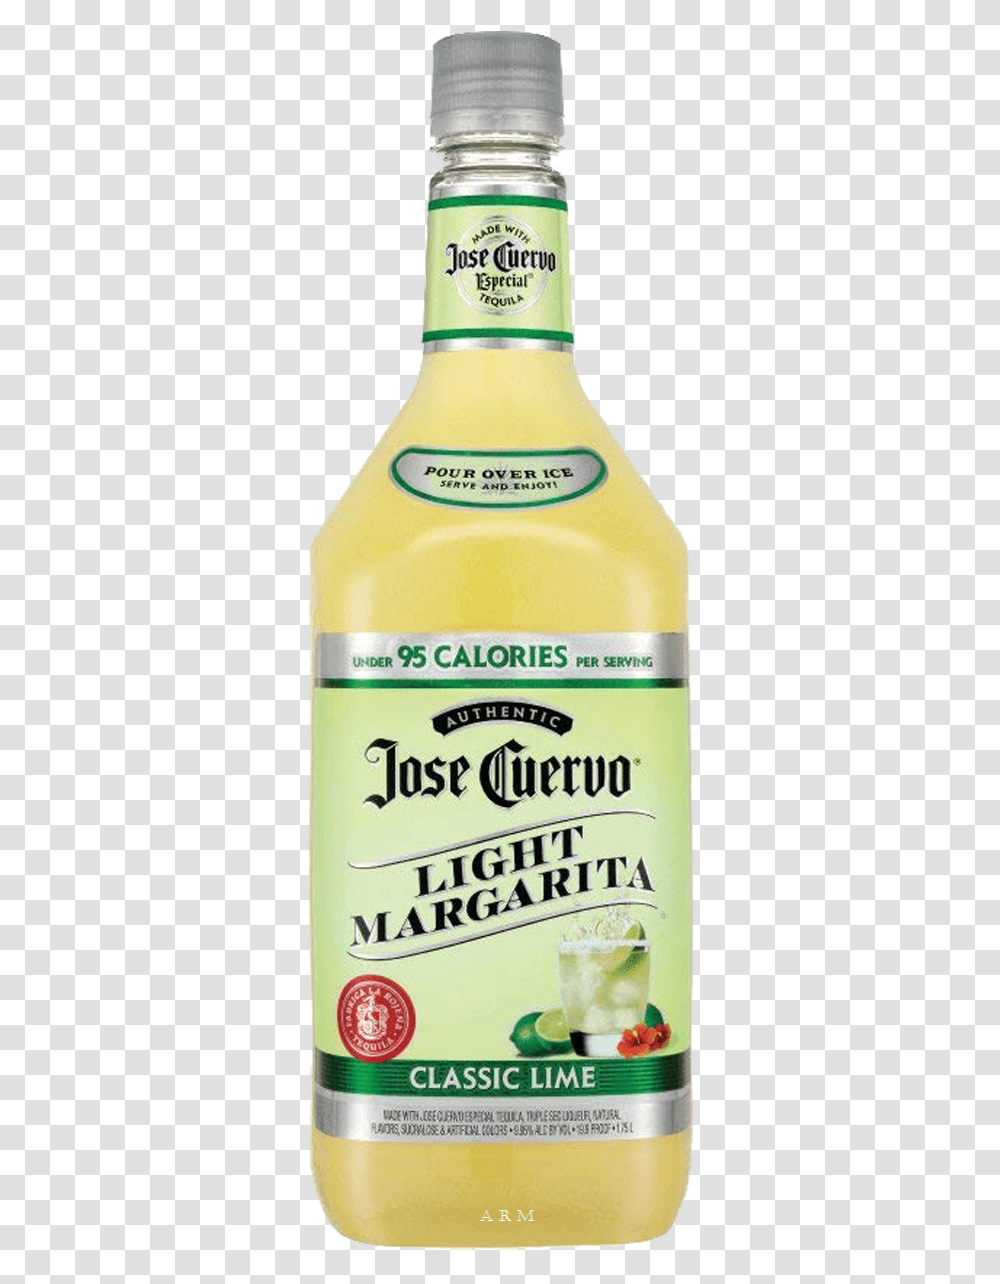 Jose Cuervo Authentic Light Margarita, Label, Beer, Alcohol Transparent Png